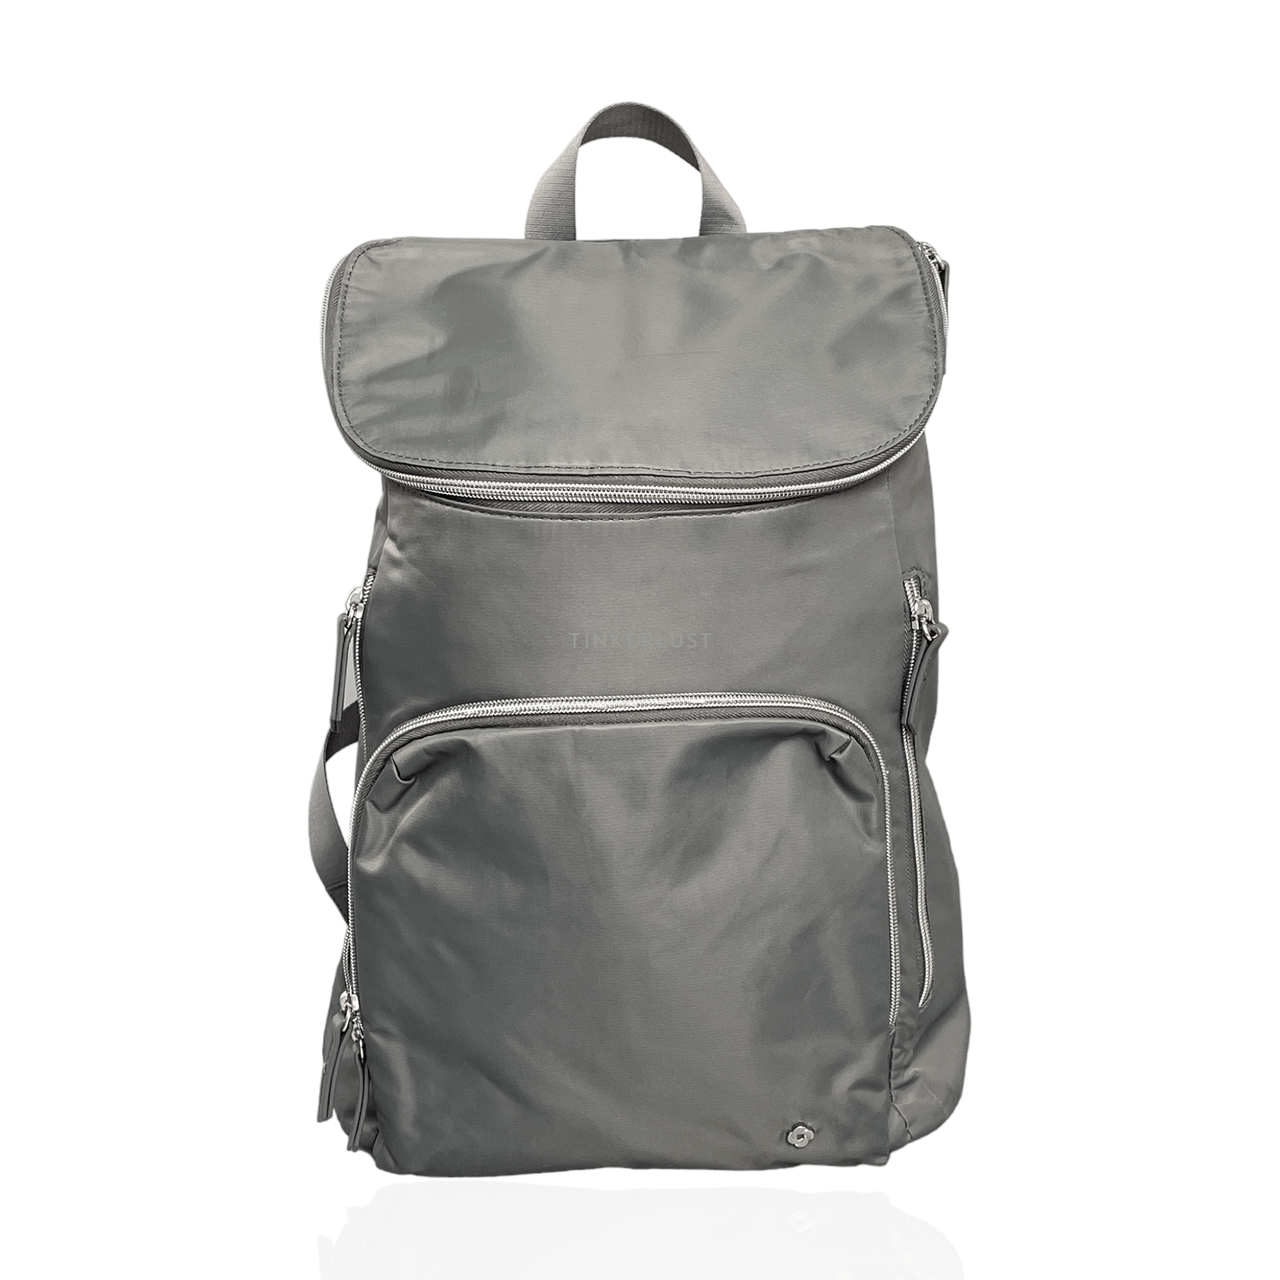 Samsonite Grey Backpack